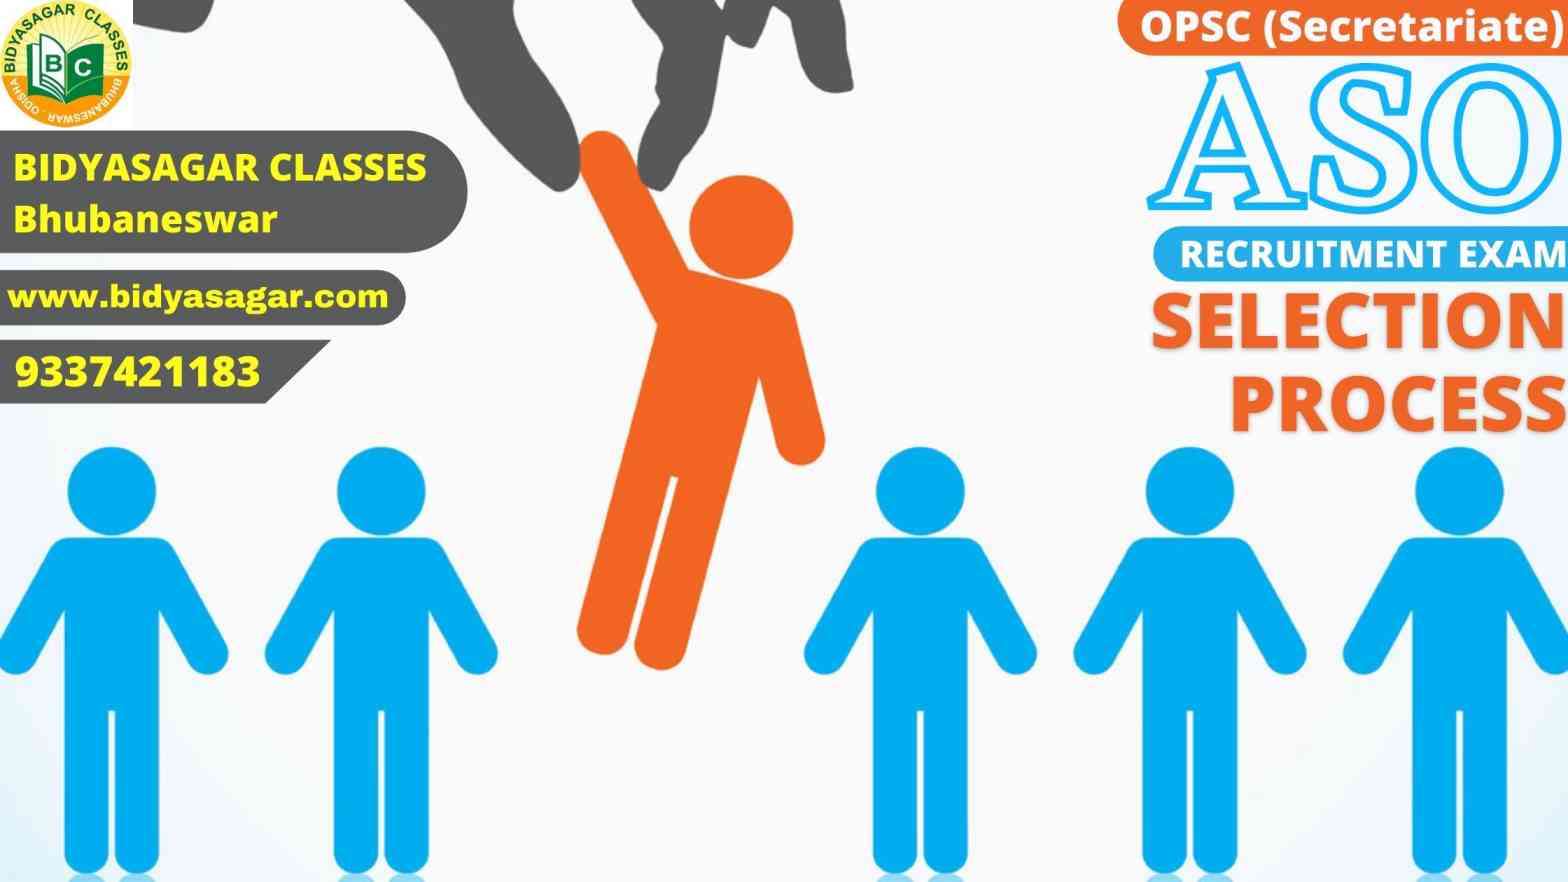 OPSC ASO Recruitment Exam 2022 Selection Process